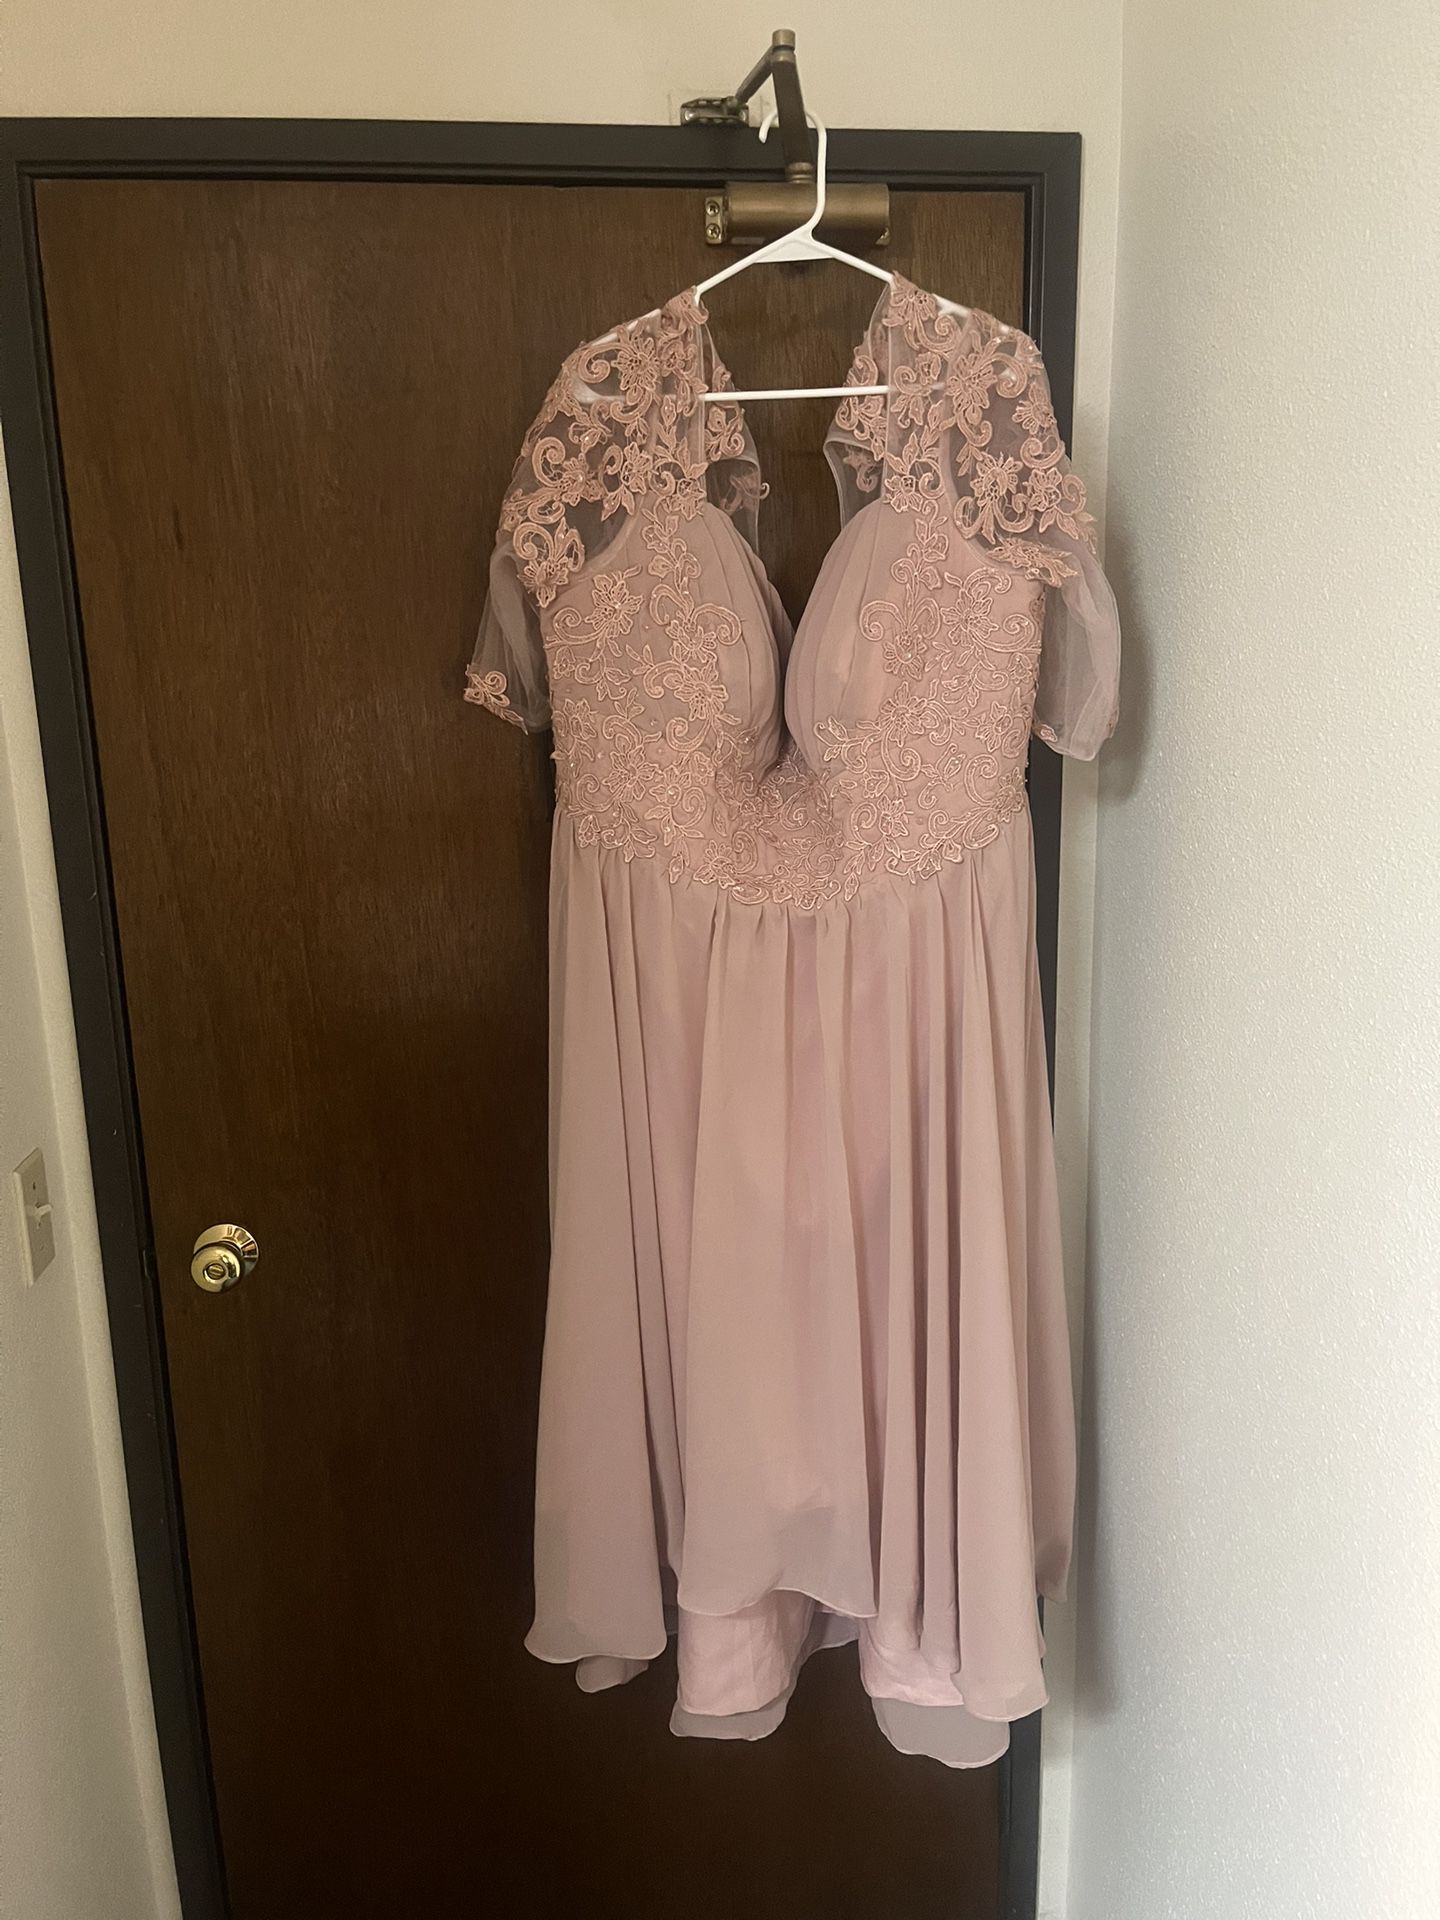 Formal Blush Dress